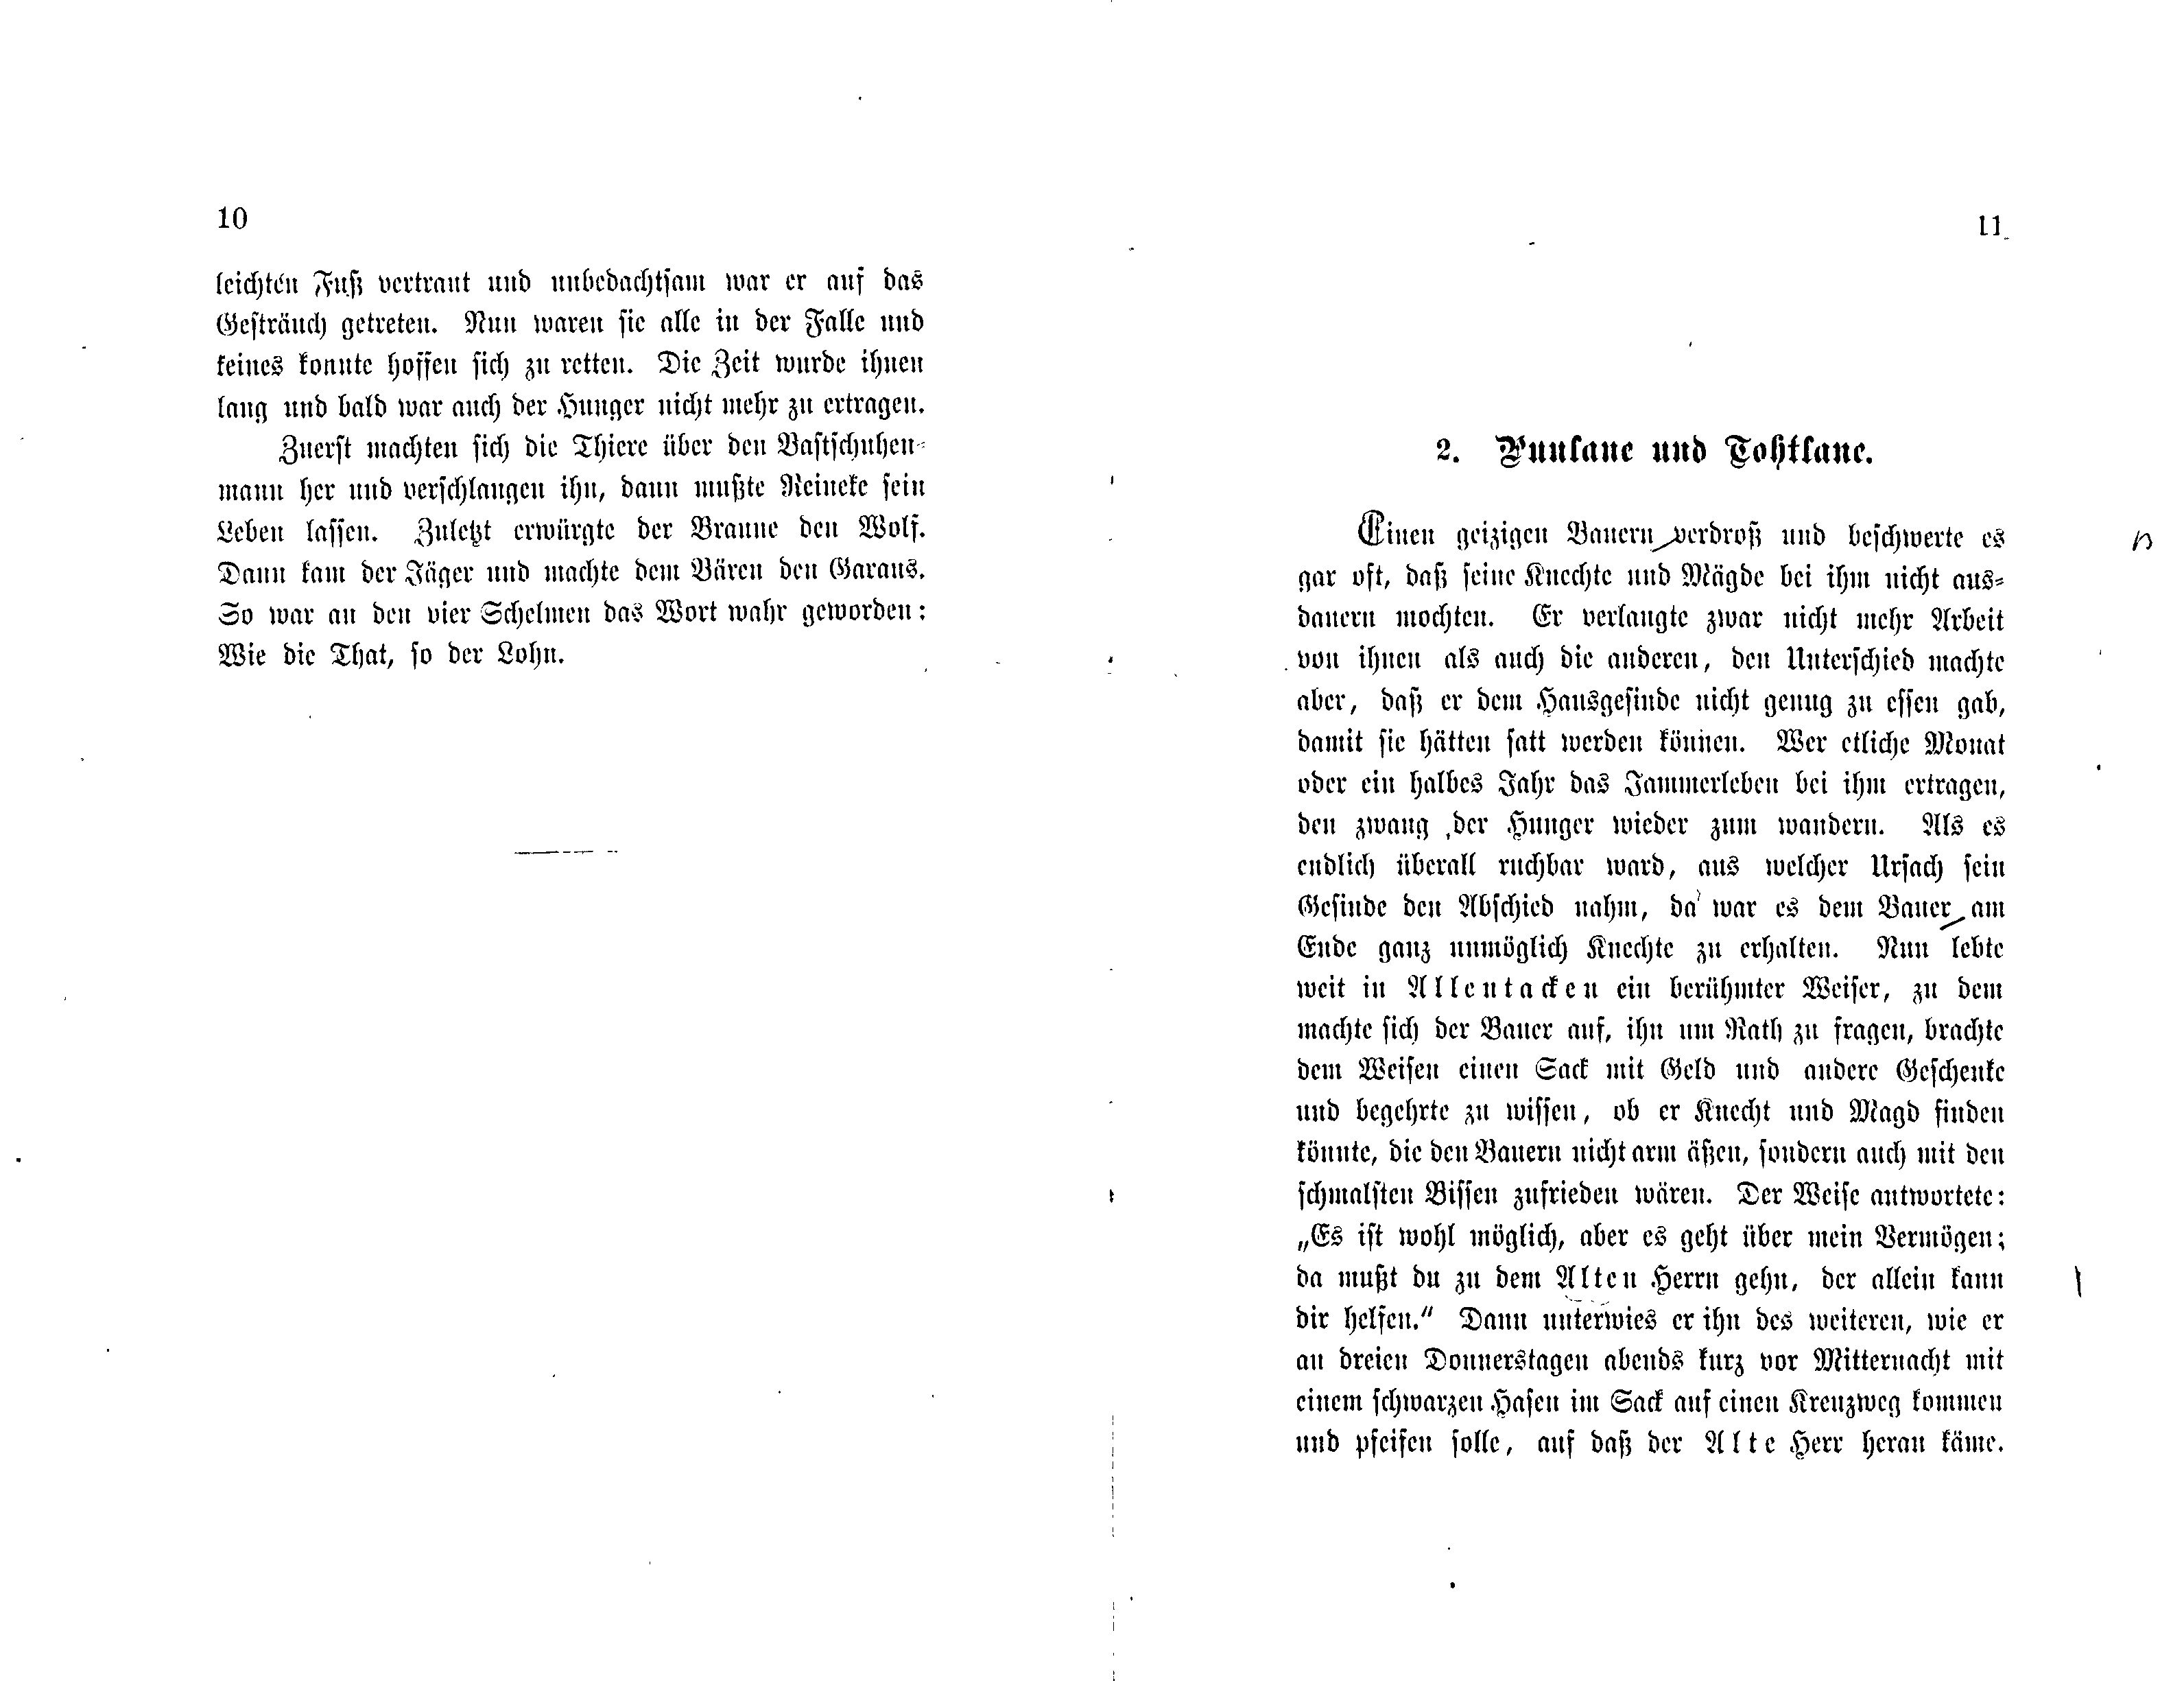 Puulane und Tohtlane (1881) | 1. (10-11) Основной текст